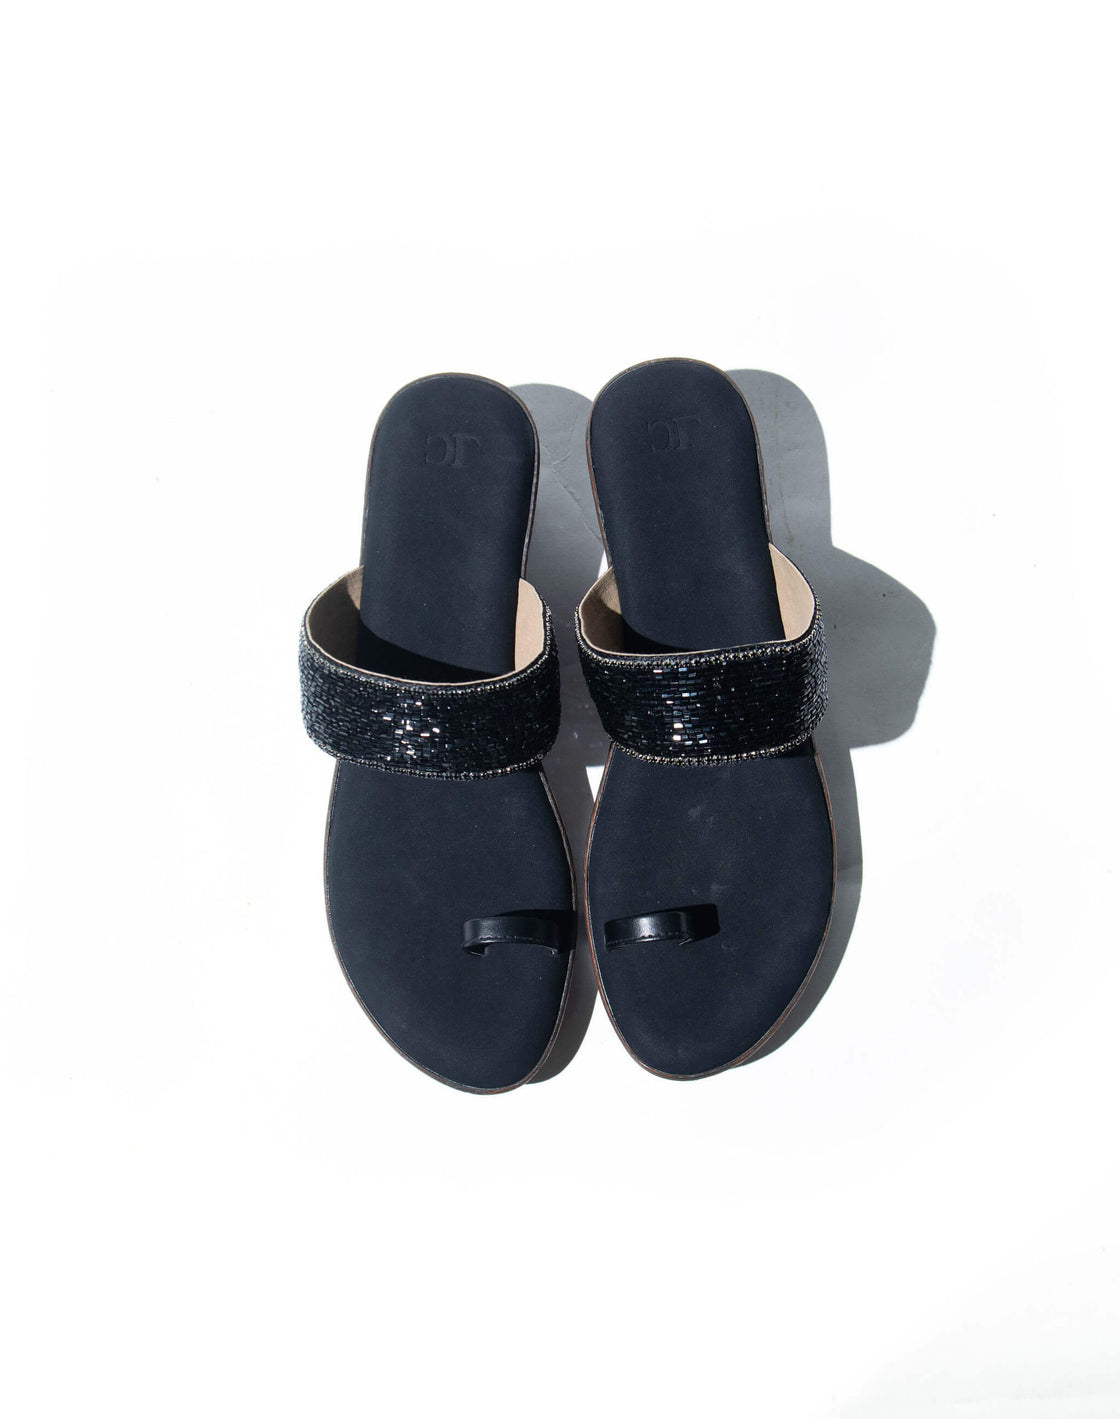 Toe ring - wedge sandal